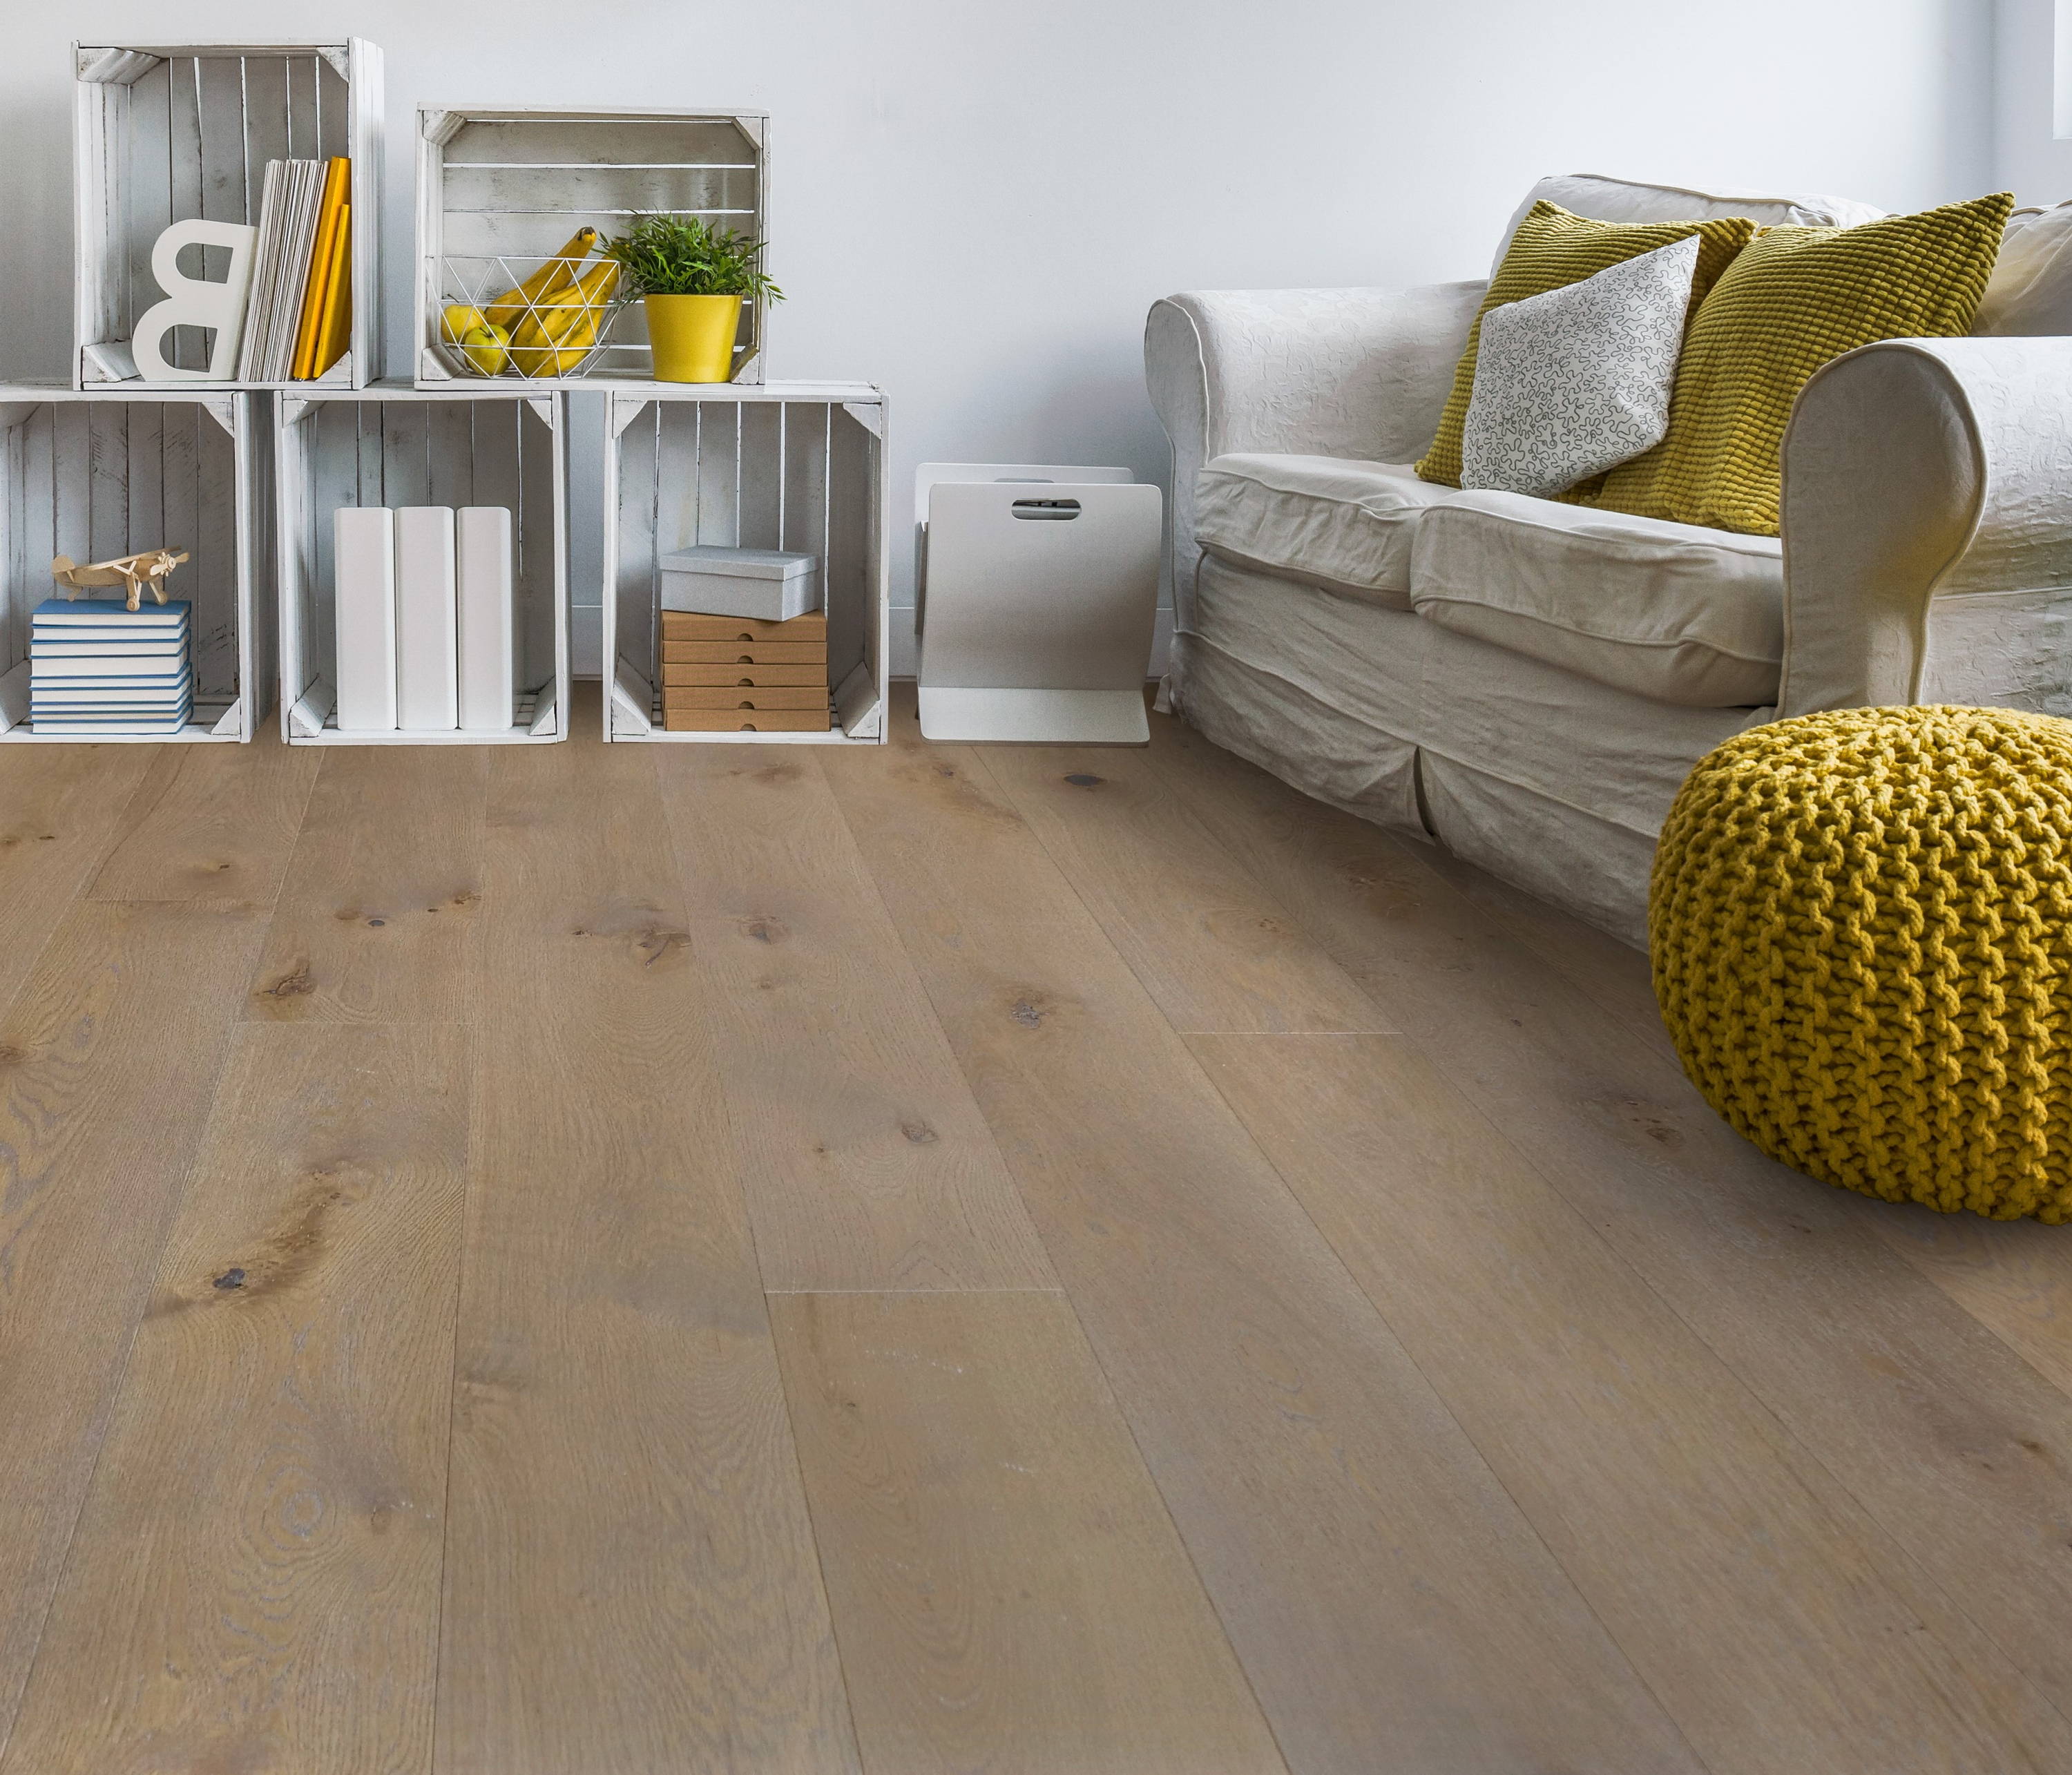 Hardwood Flooring Increase, All About Wood Hardwood Floors Increase Home Values